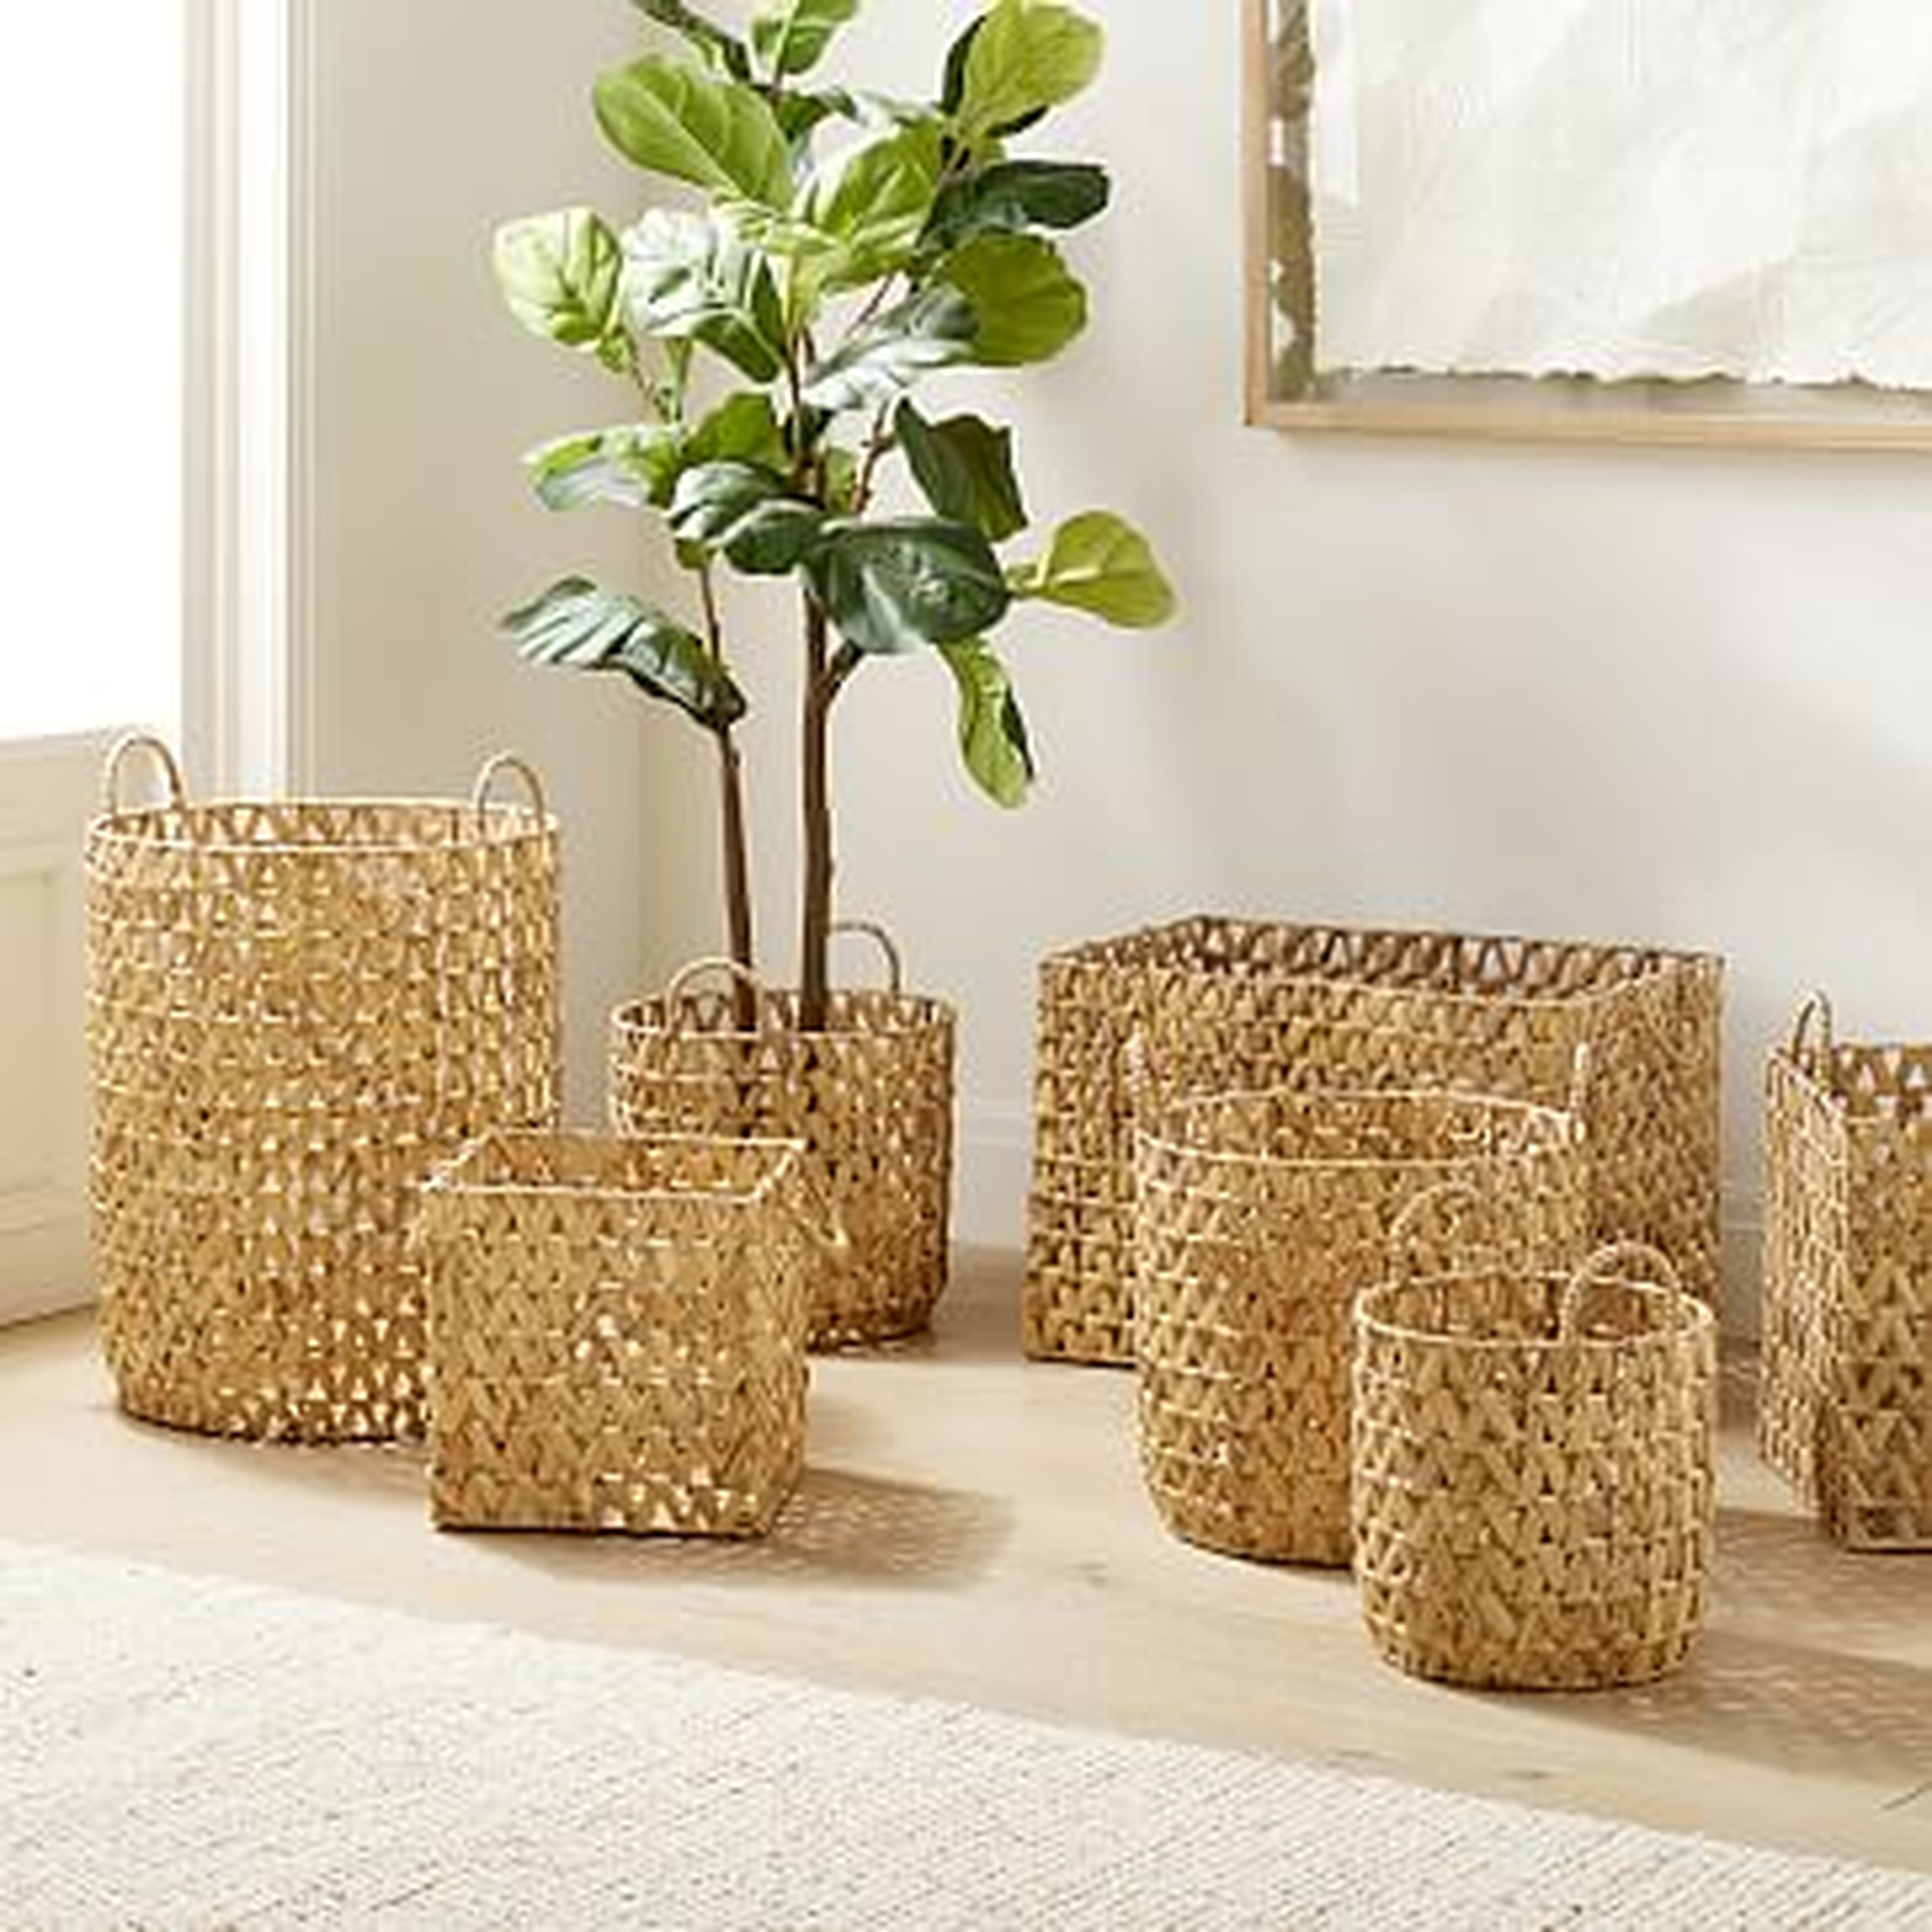 Open Weave Zigzag Baskets, Set of 4, Small, Medium, Large, Hamper - West Elm